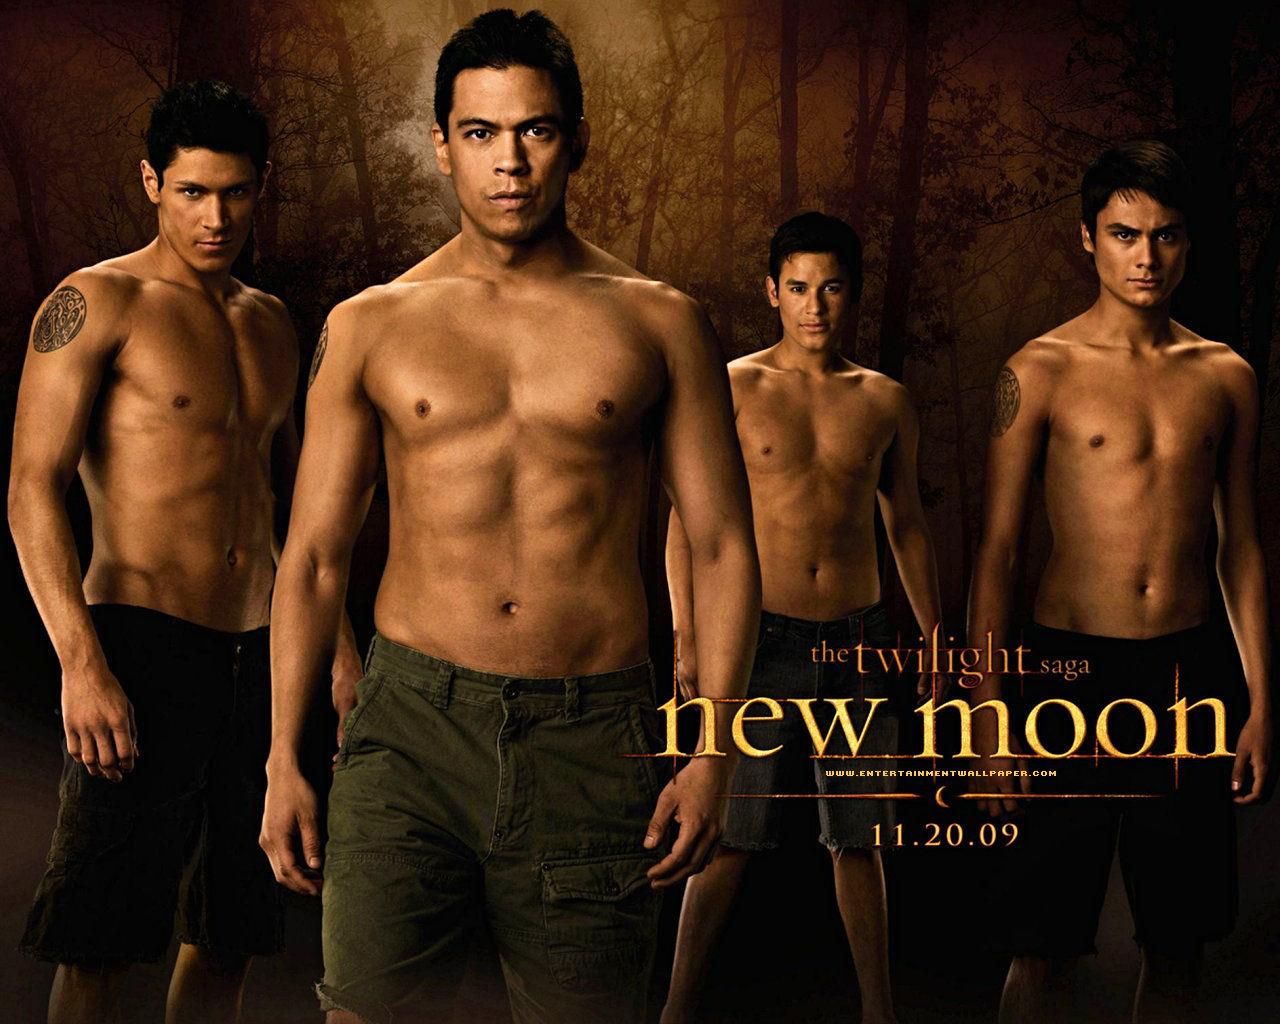 The Twilight Saga: New Moon movie